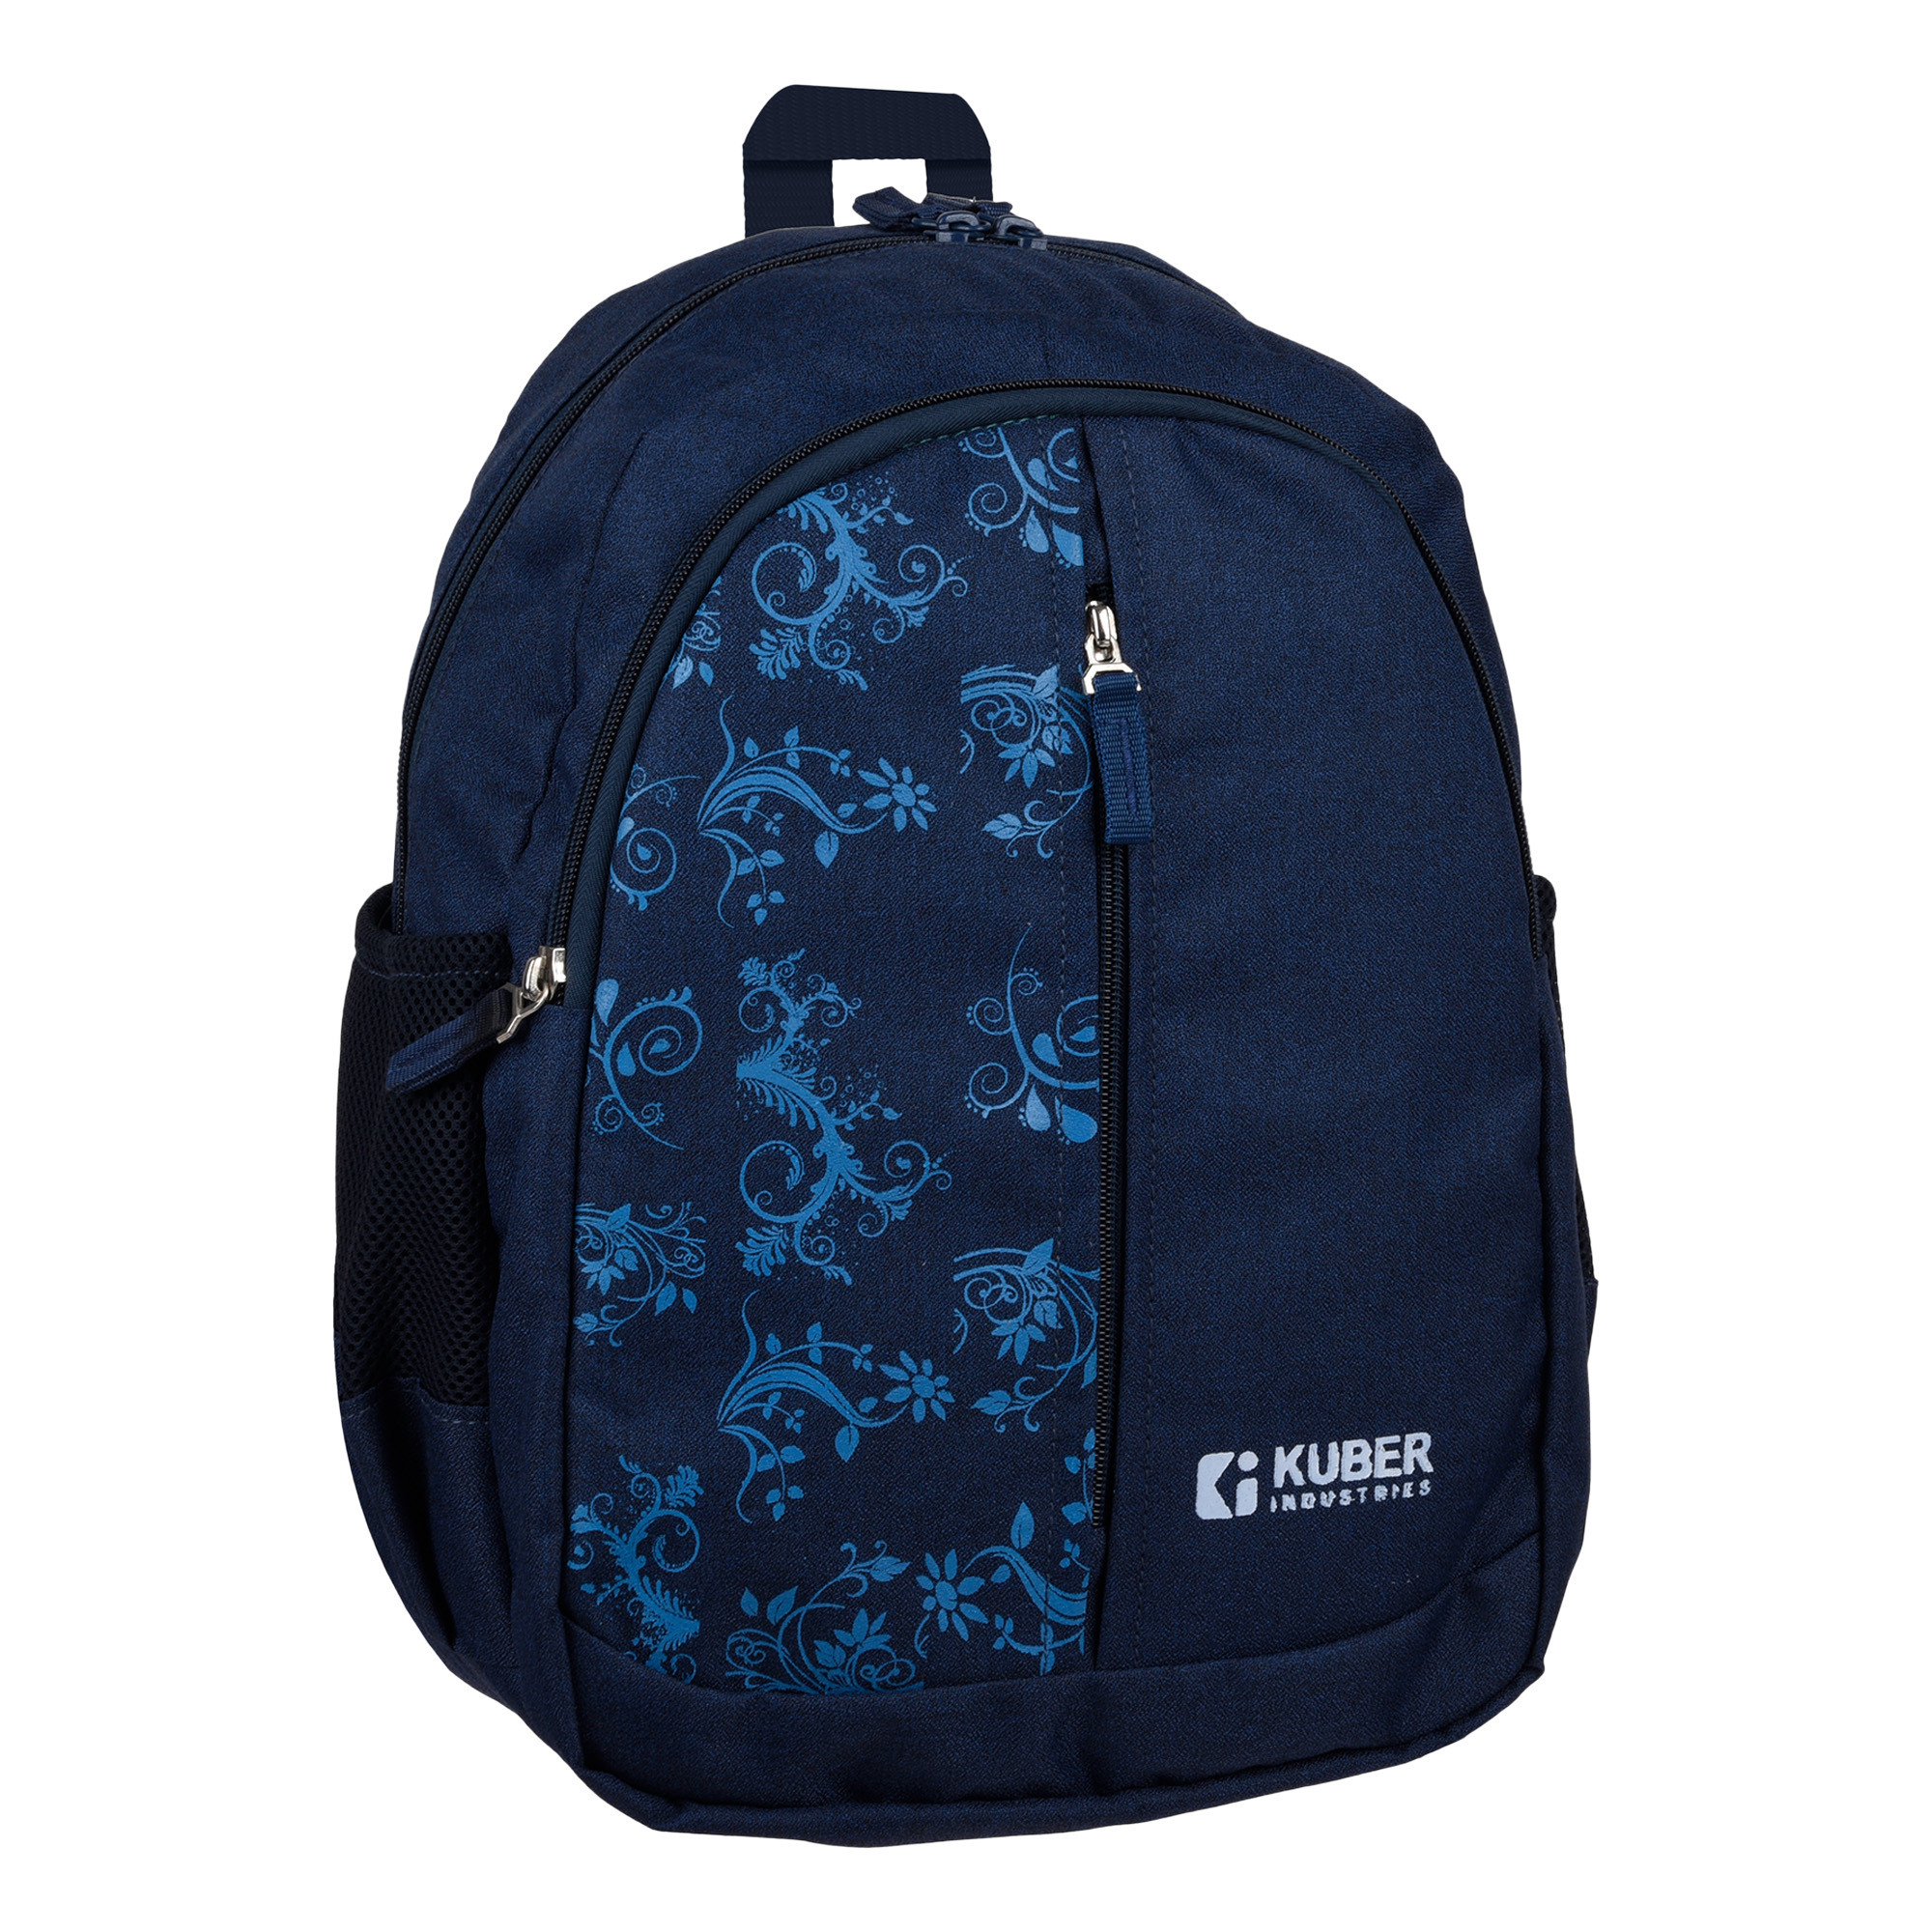 Kuber Industries Backpack | School Backpack for Kids | Collage Backpack | School Bag for Boys & Girls | 3 Compartments Mini Backpack | Half Print School Bag | Navy Blue